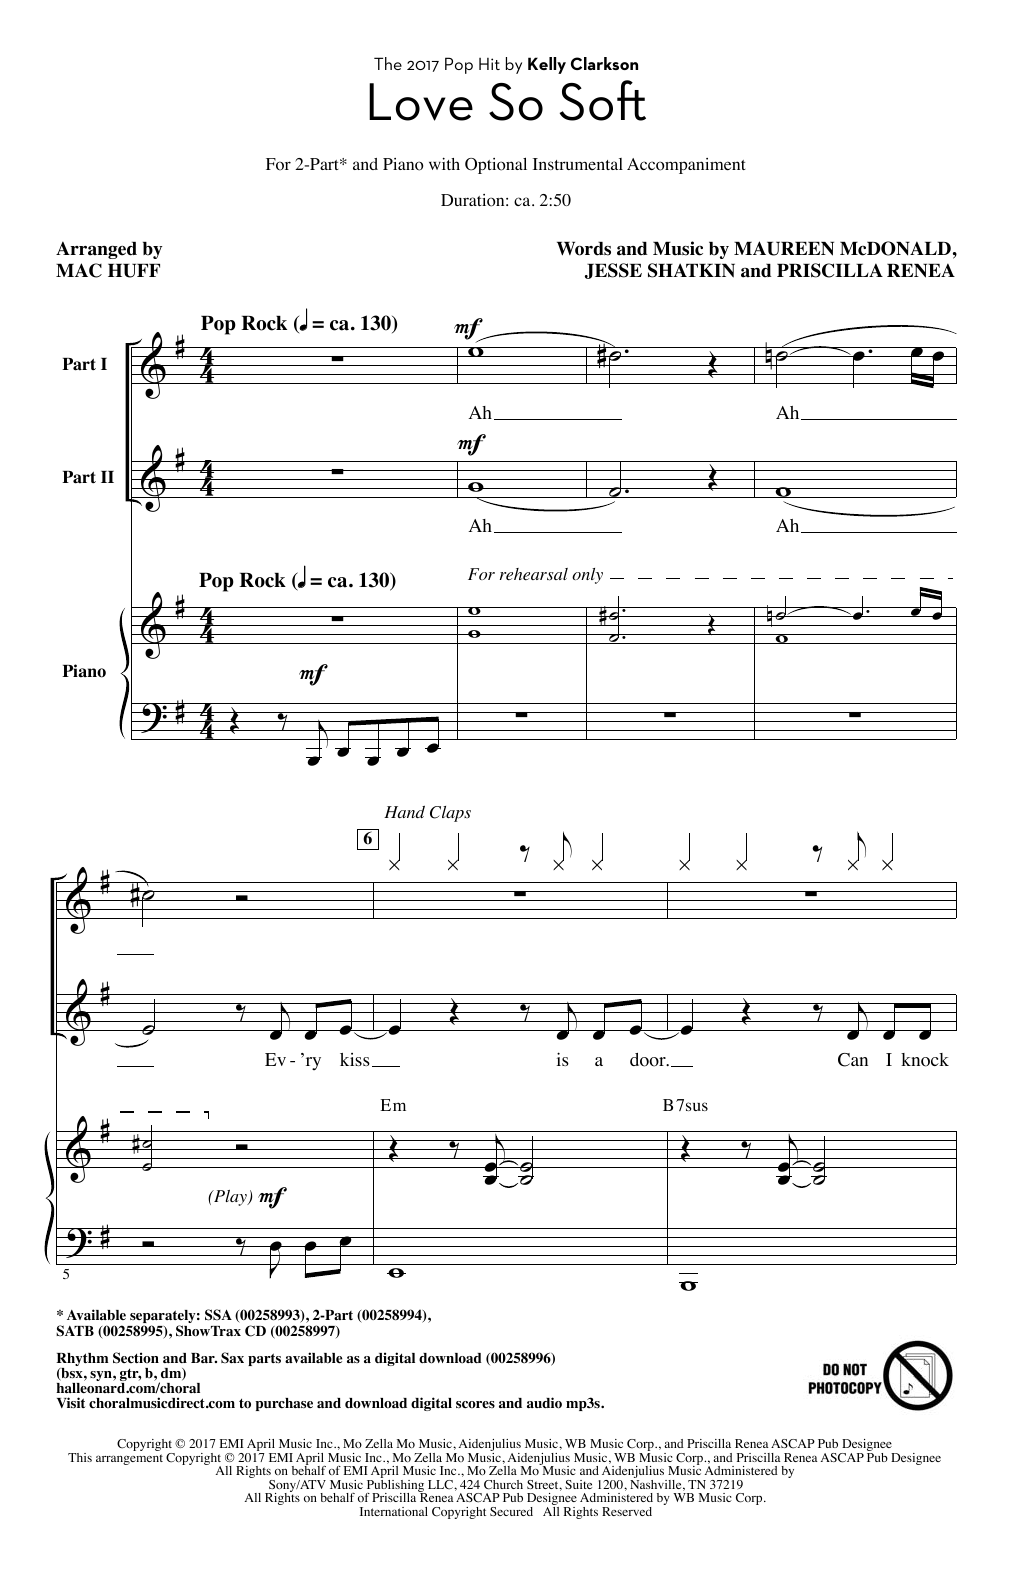 Mac Huff Love So Soft Sheet Music Notes & Chords for 2-Part Choir - Download or Print PDF